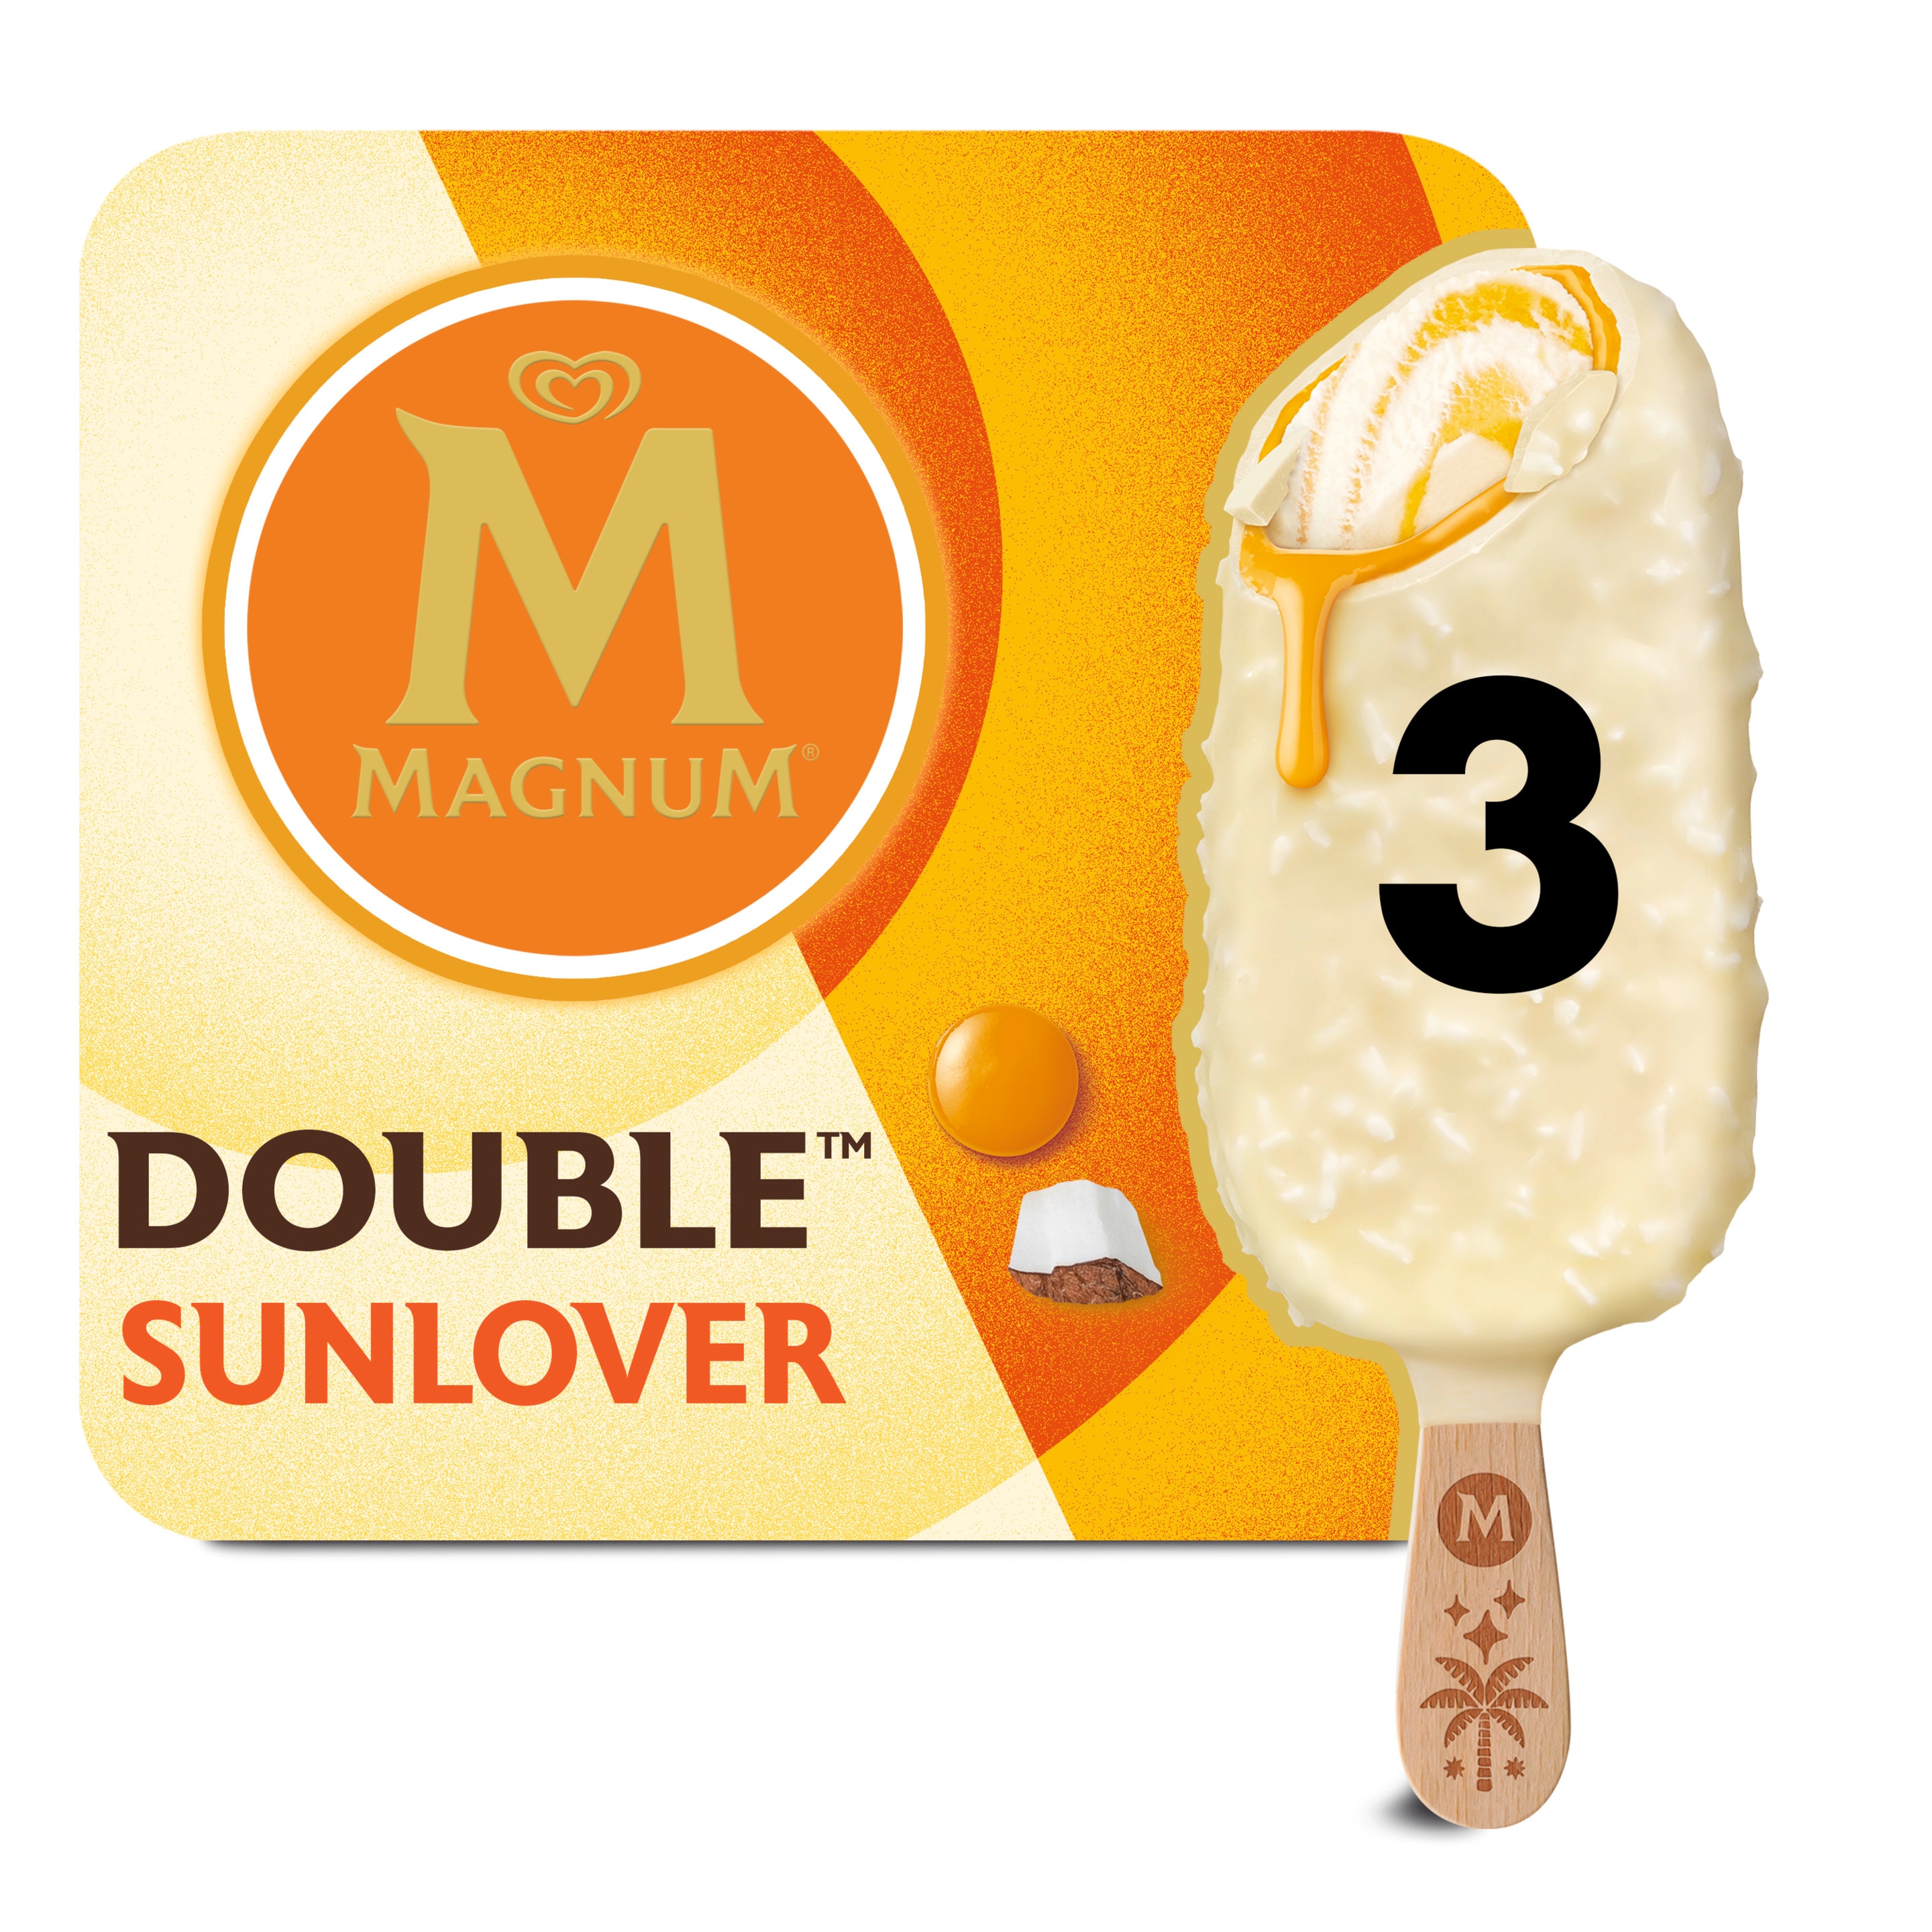 Magnum Double Sunlover 3 x 85 ml